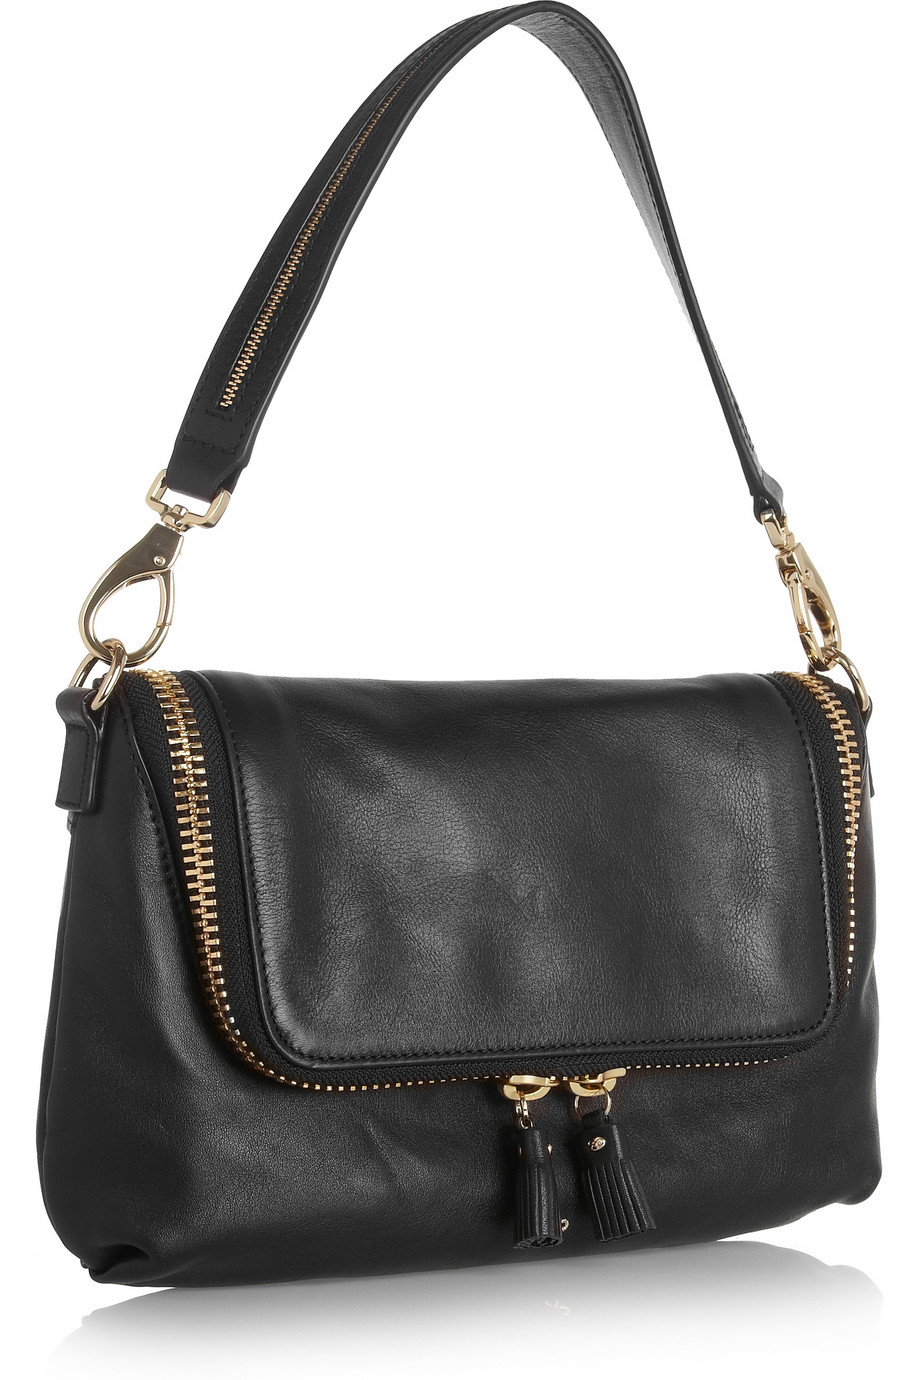 Anya hindmarch Maxi Zip Crossbody Leather Shoulder Bag in Black | Lyst